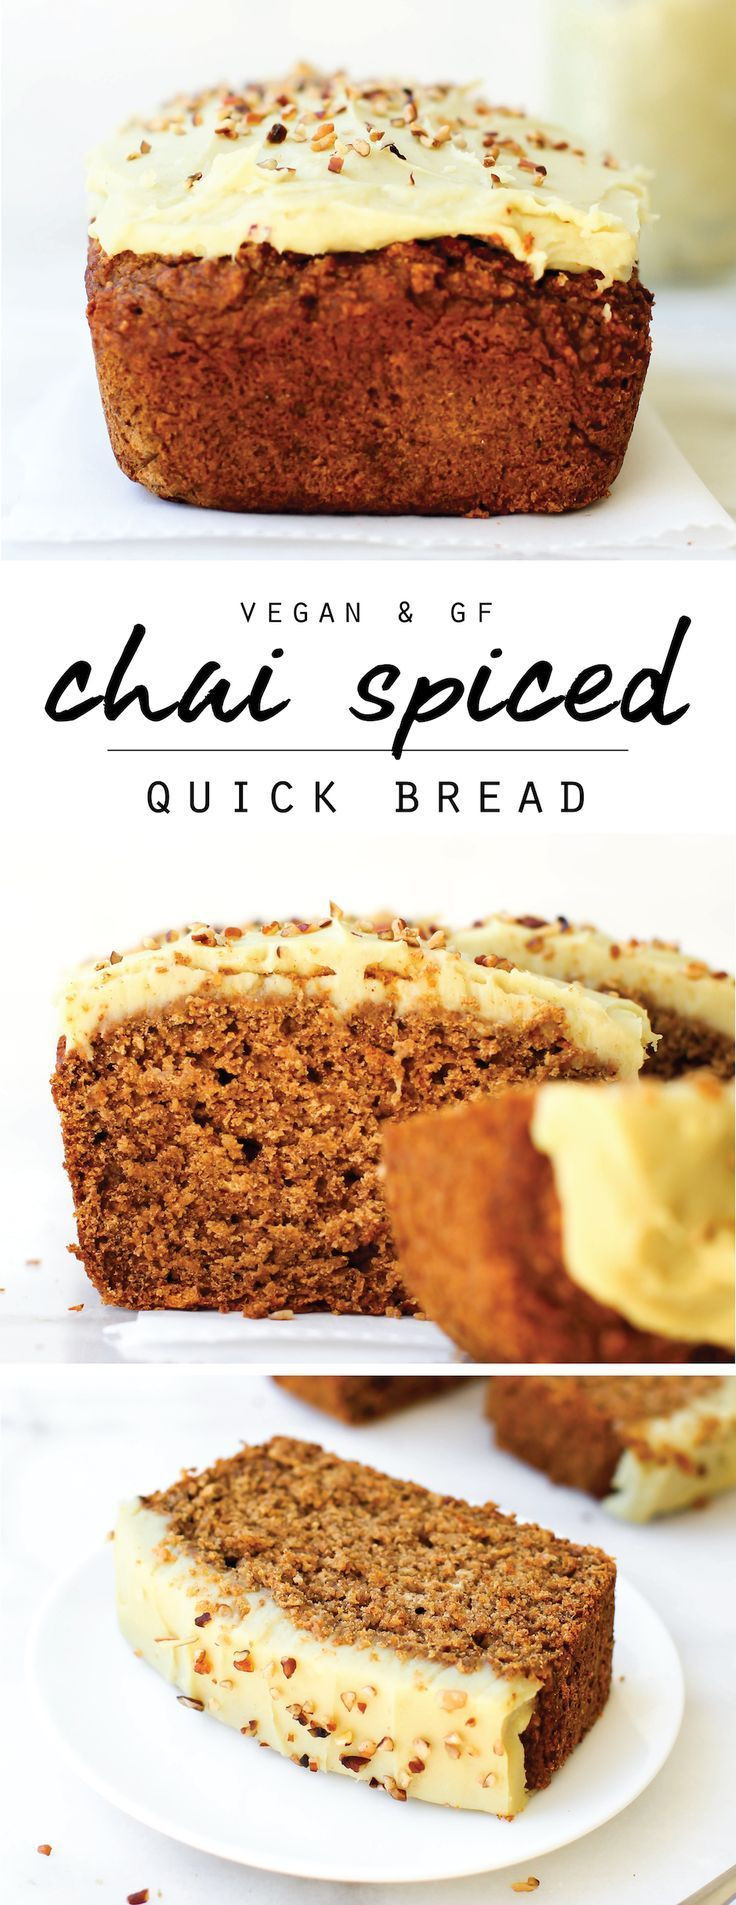 Quick Vegan Dessert Recipes
 Best 25 Fruit bread ideas on Pinterest